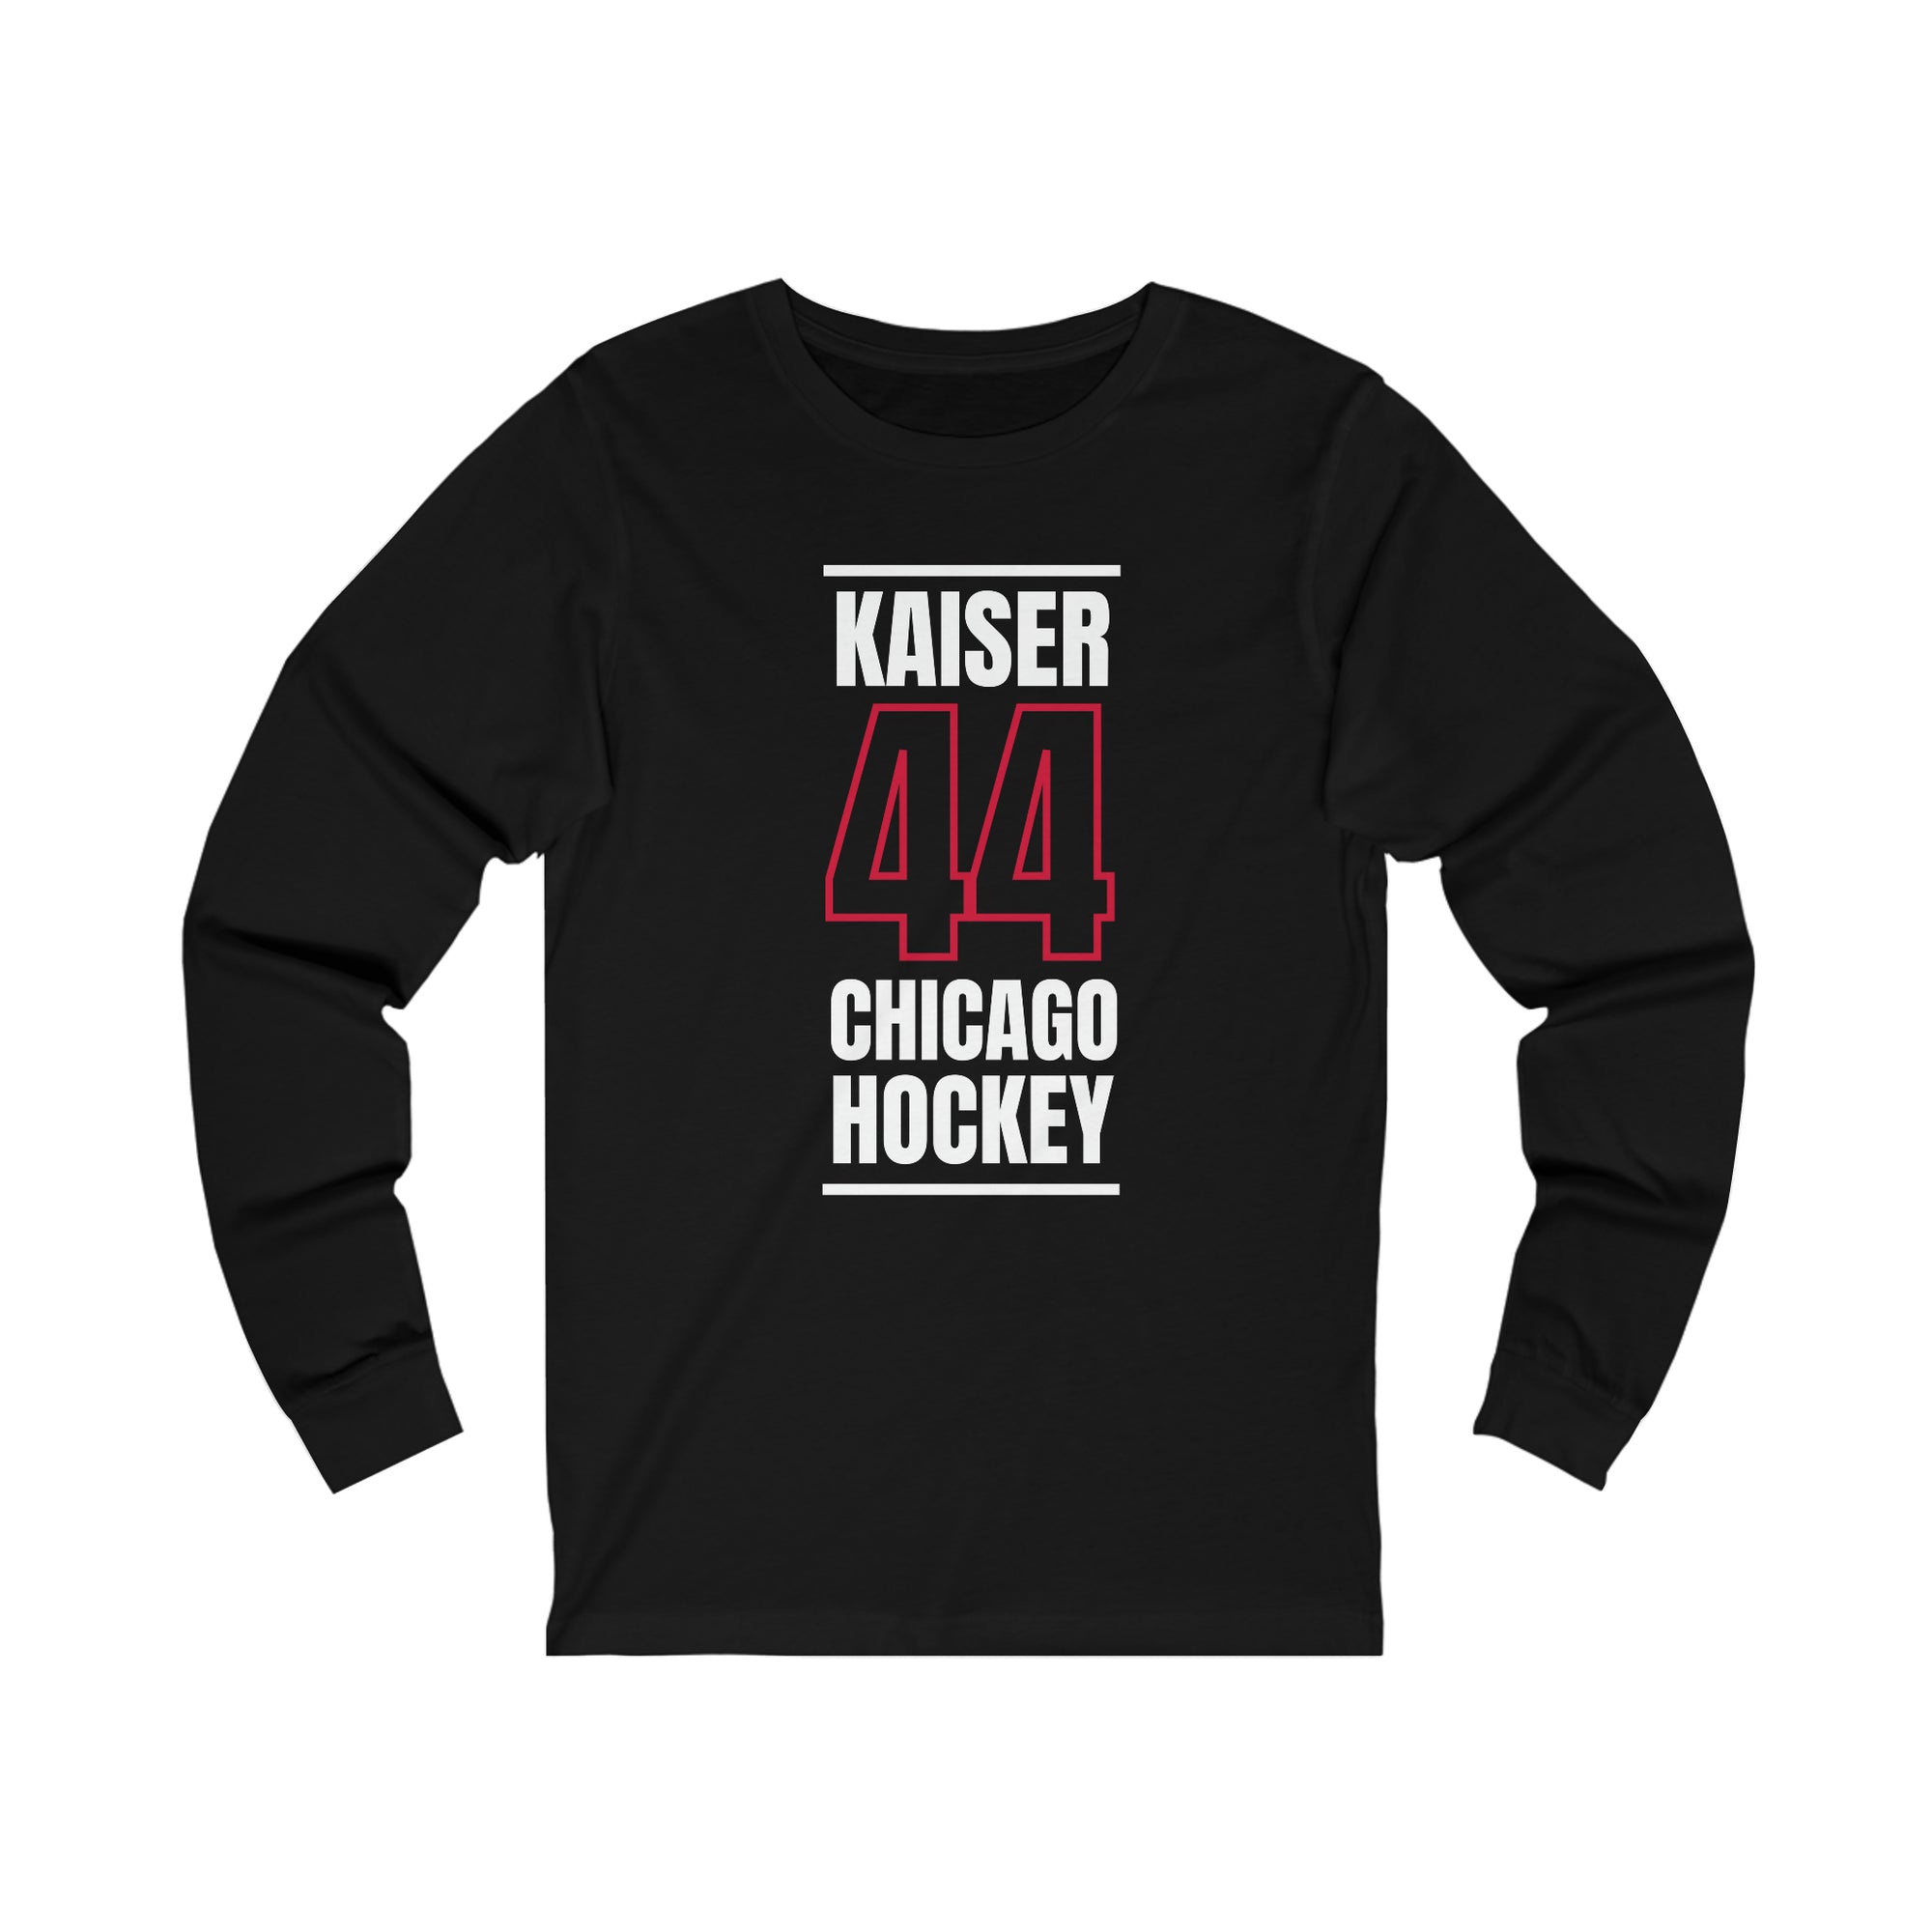 Kaiser 44 Chicago Hockey Black Vertical Design Unisex Jersey Long Sleeve Shirt